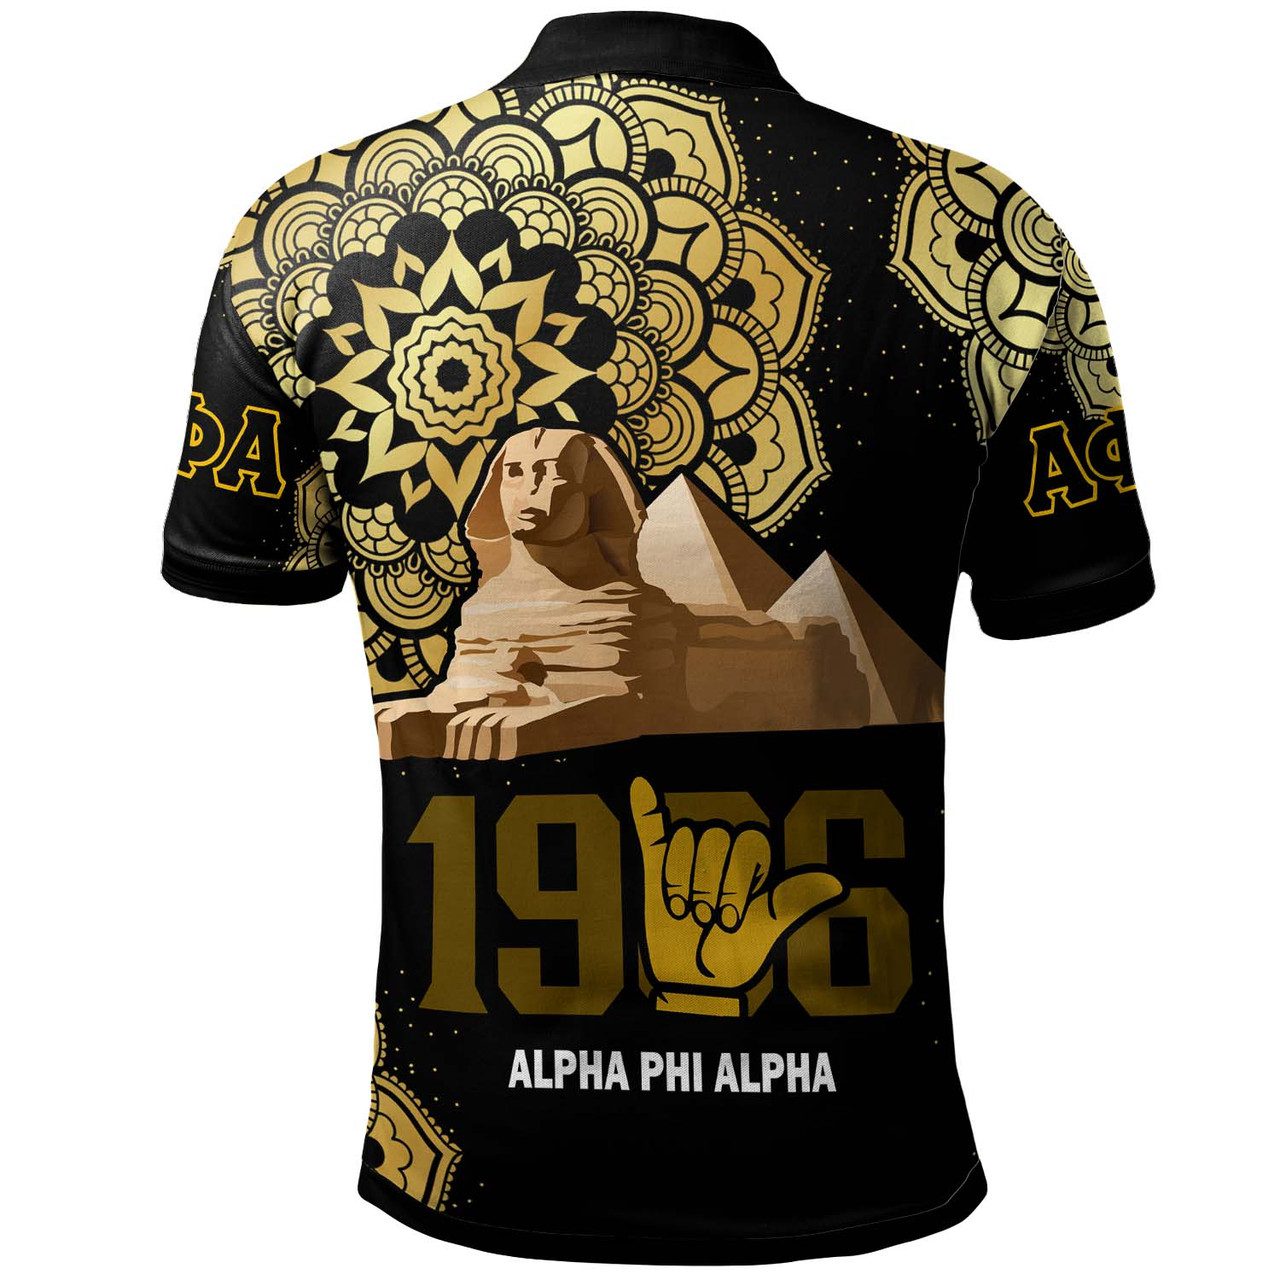 Alpha Phi Alpha Polo Shirt – Fraternity Hand Sign with Kong 1906 and Mandala Pattern Polo Shirt